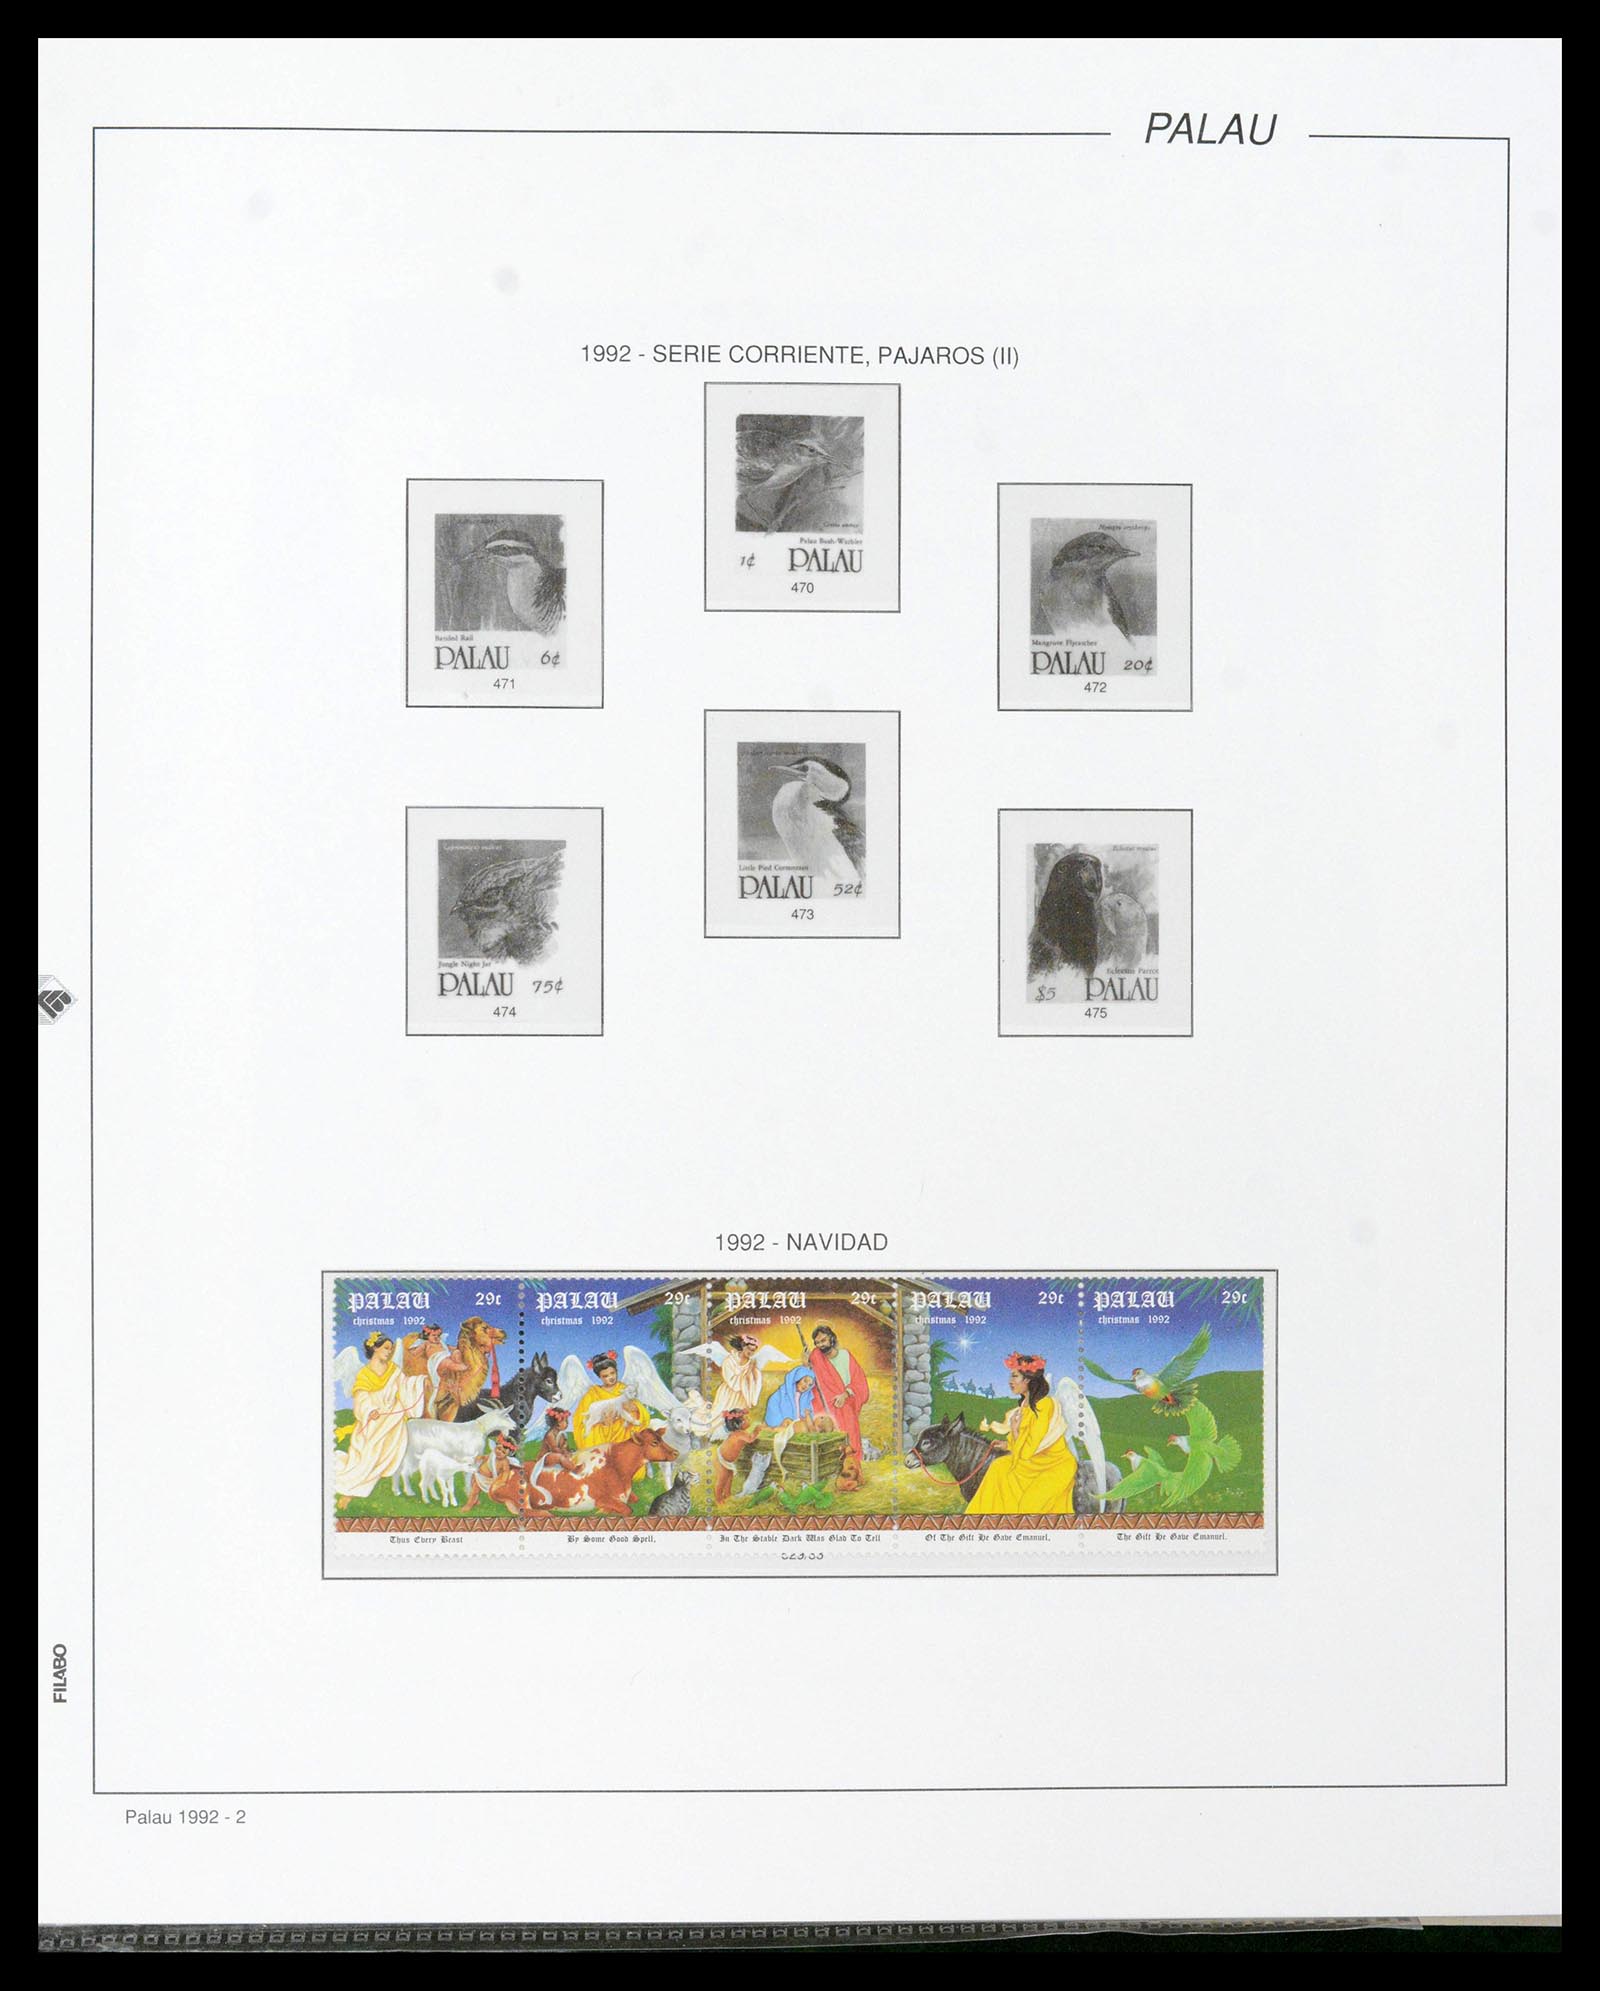 39222 0051 - Stamp collection 39222 Palau, Micronesia and Marshall islands 1980-1995.